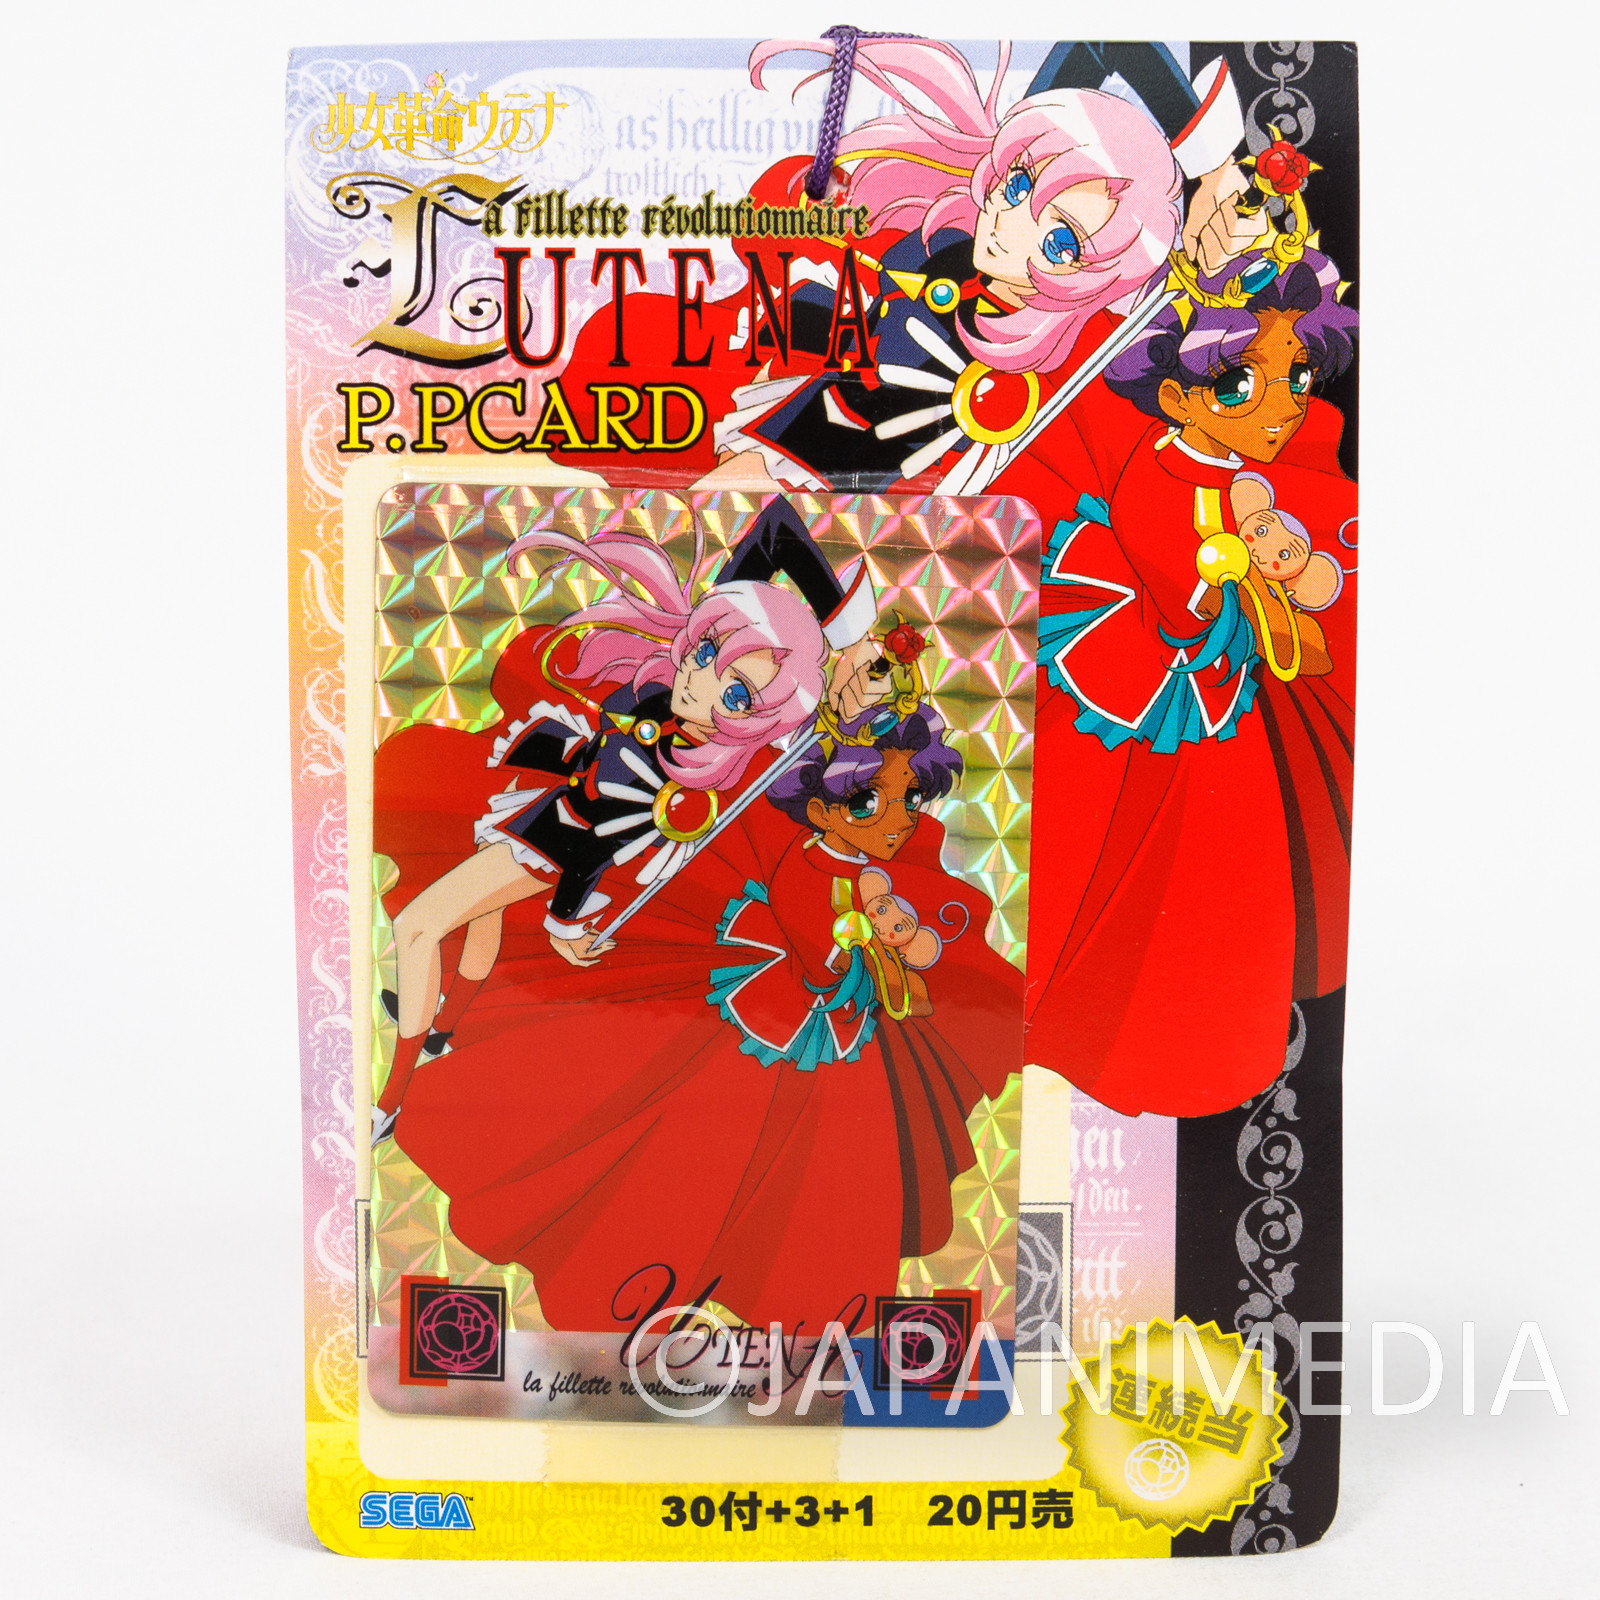 Retro RARE Revolutionary Girl Utena P.P Card 34pc Set Amada 1988 #5 JAPAN ANIME